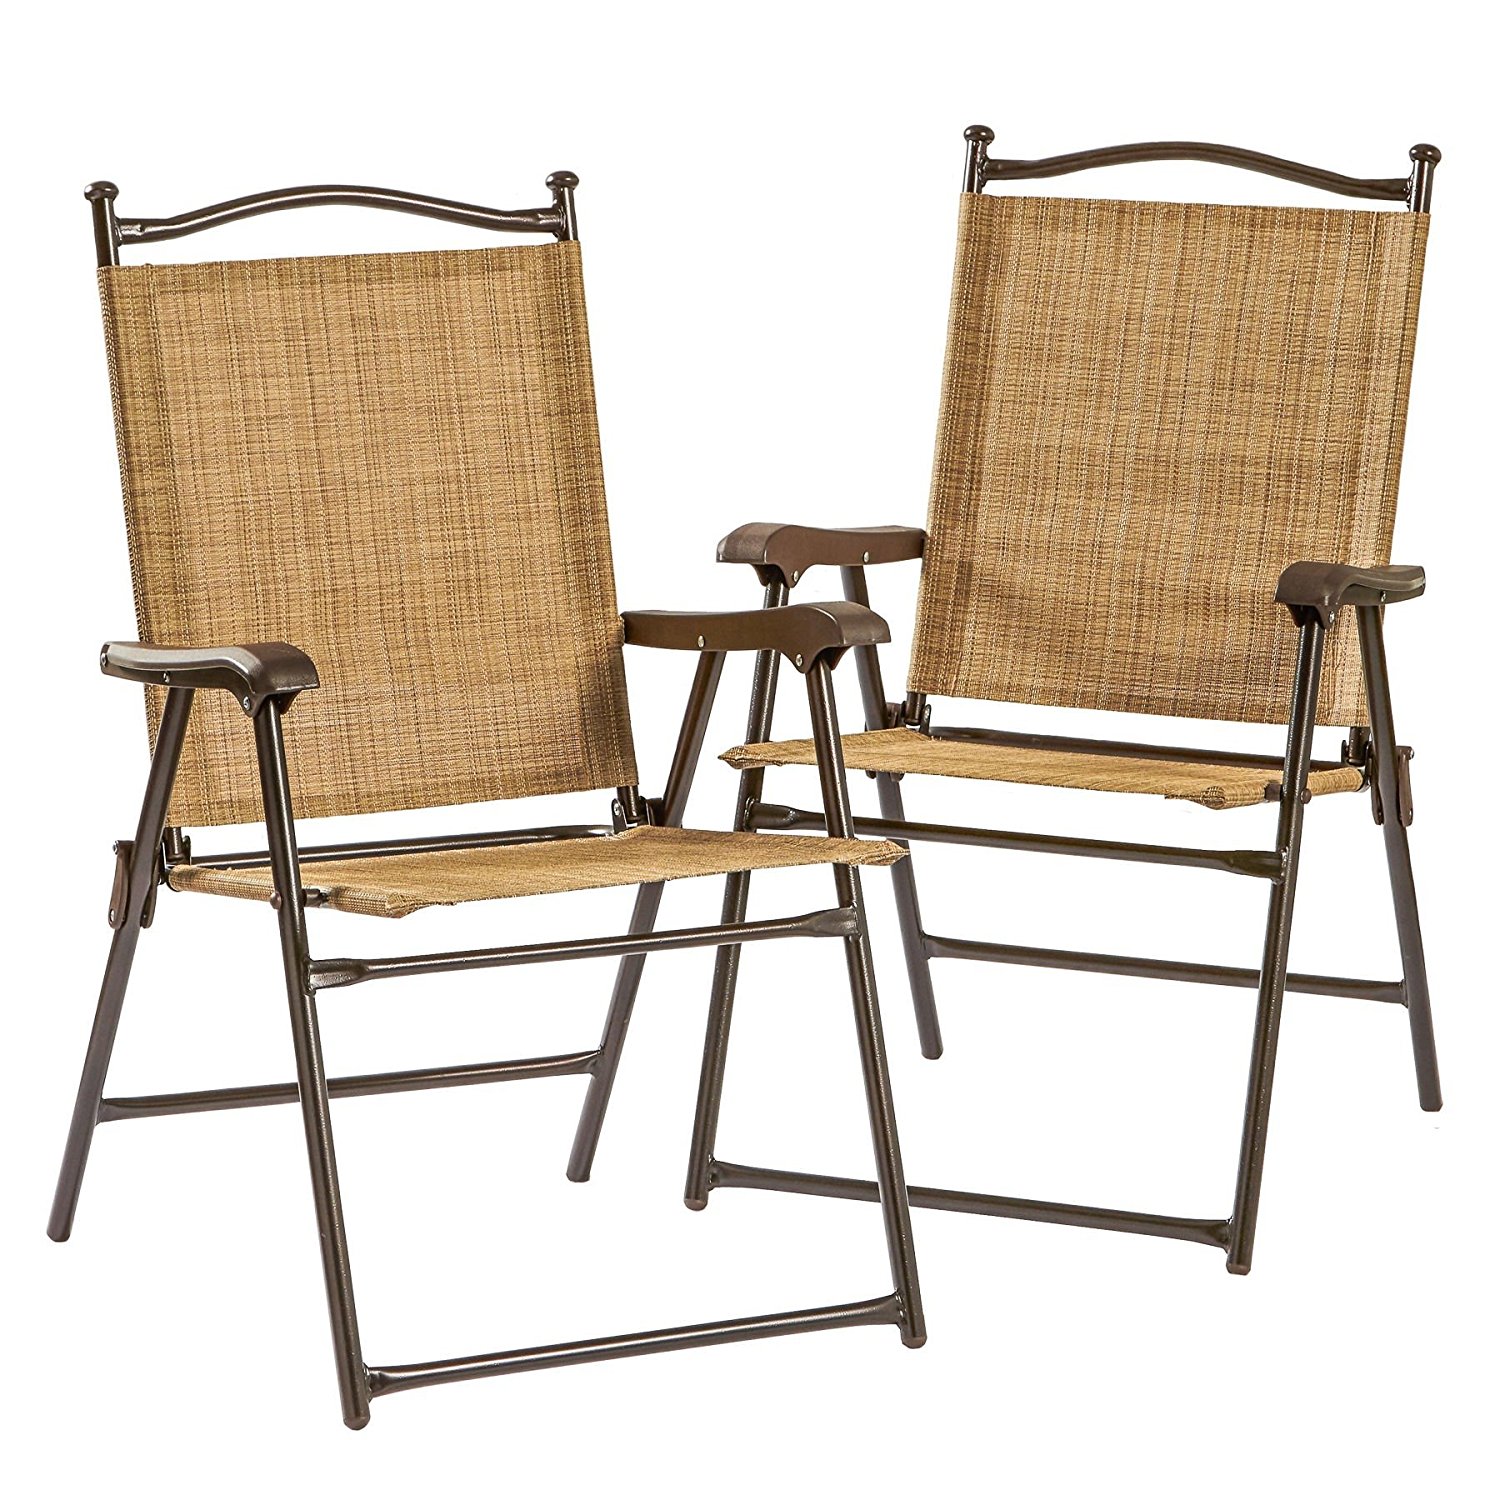 Amazon.com : Folding UV-resistant Outdoor Chairs (Set of 2) : Garden ...